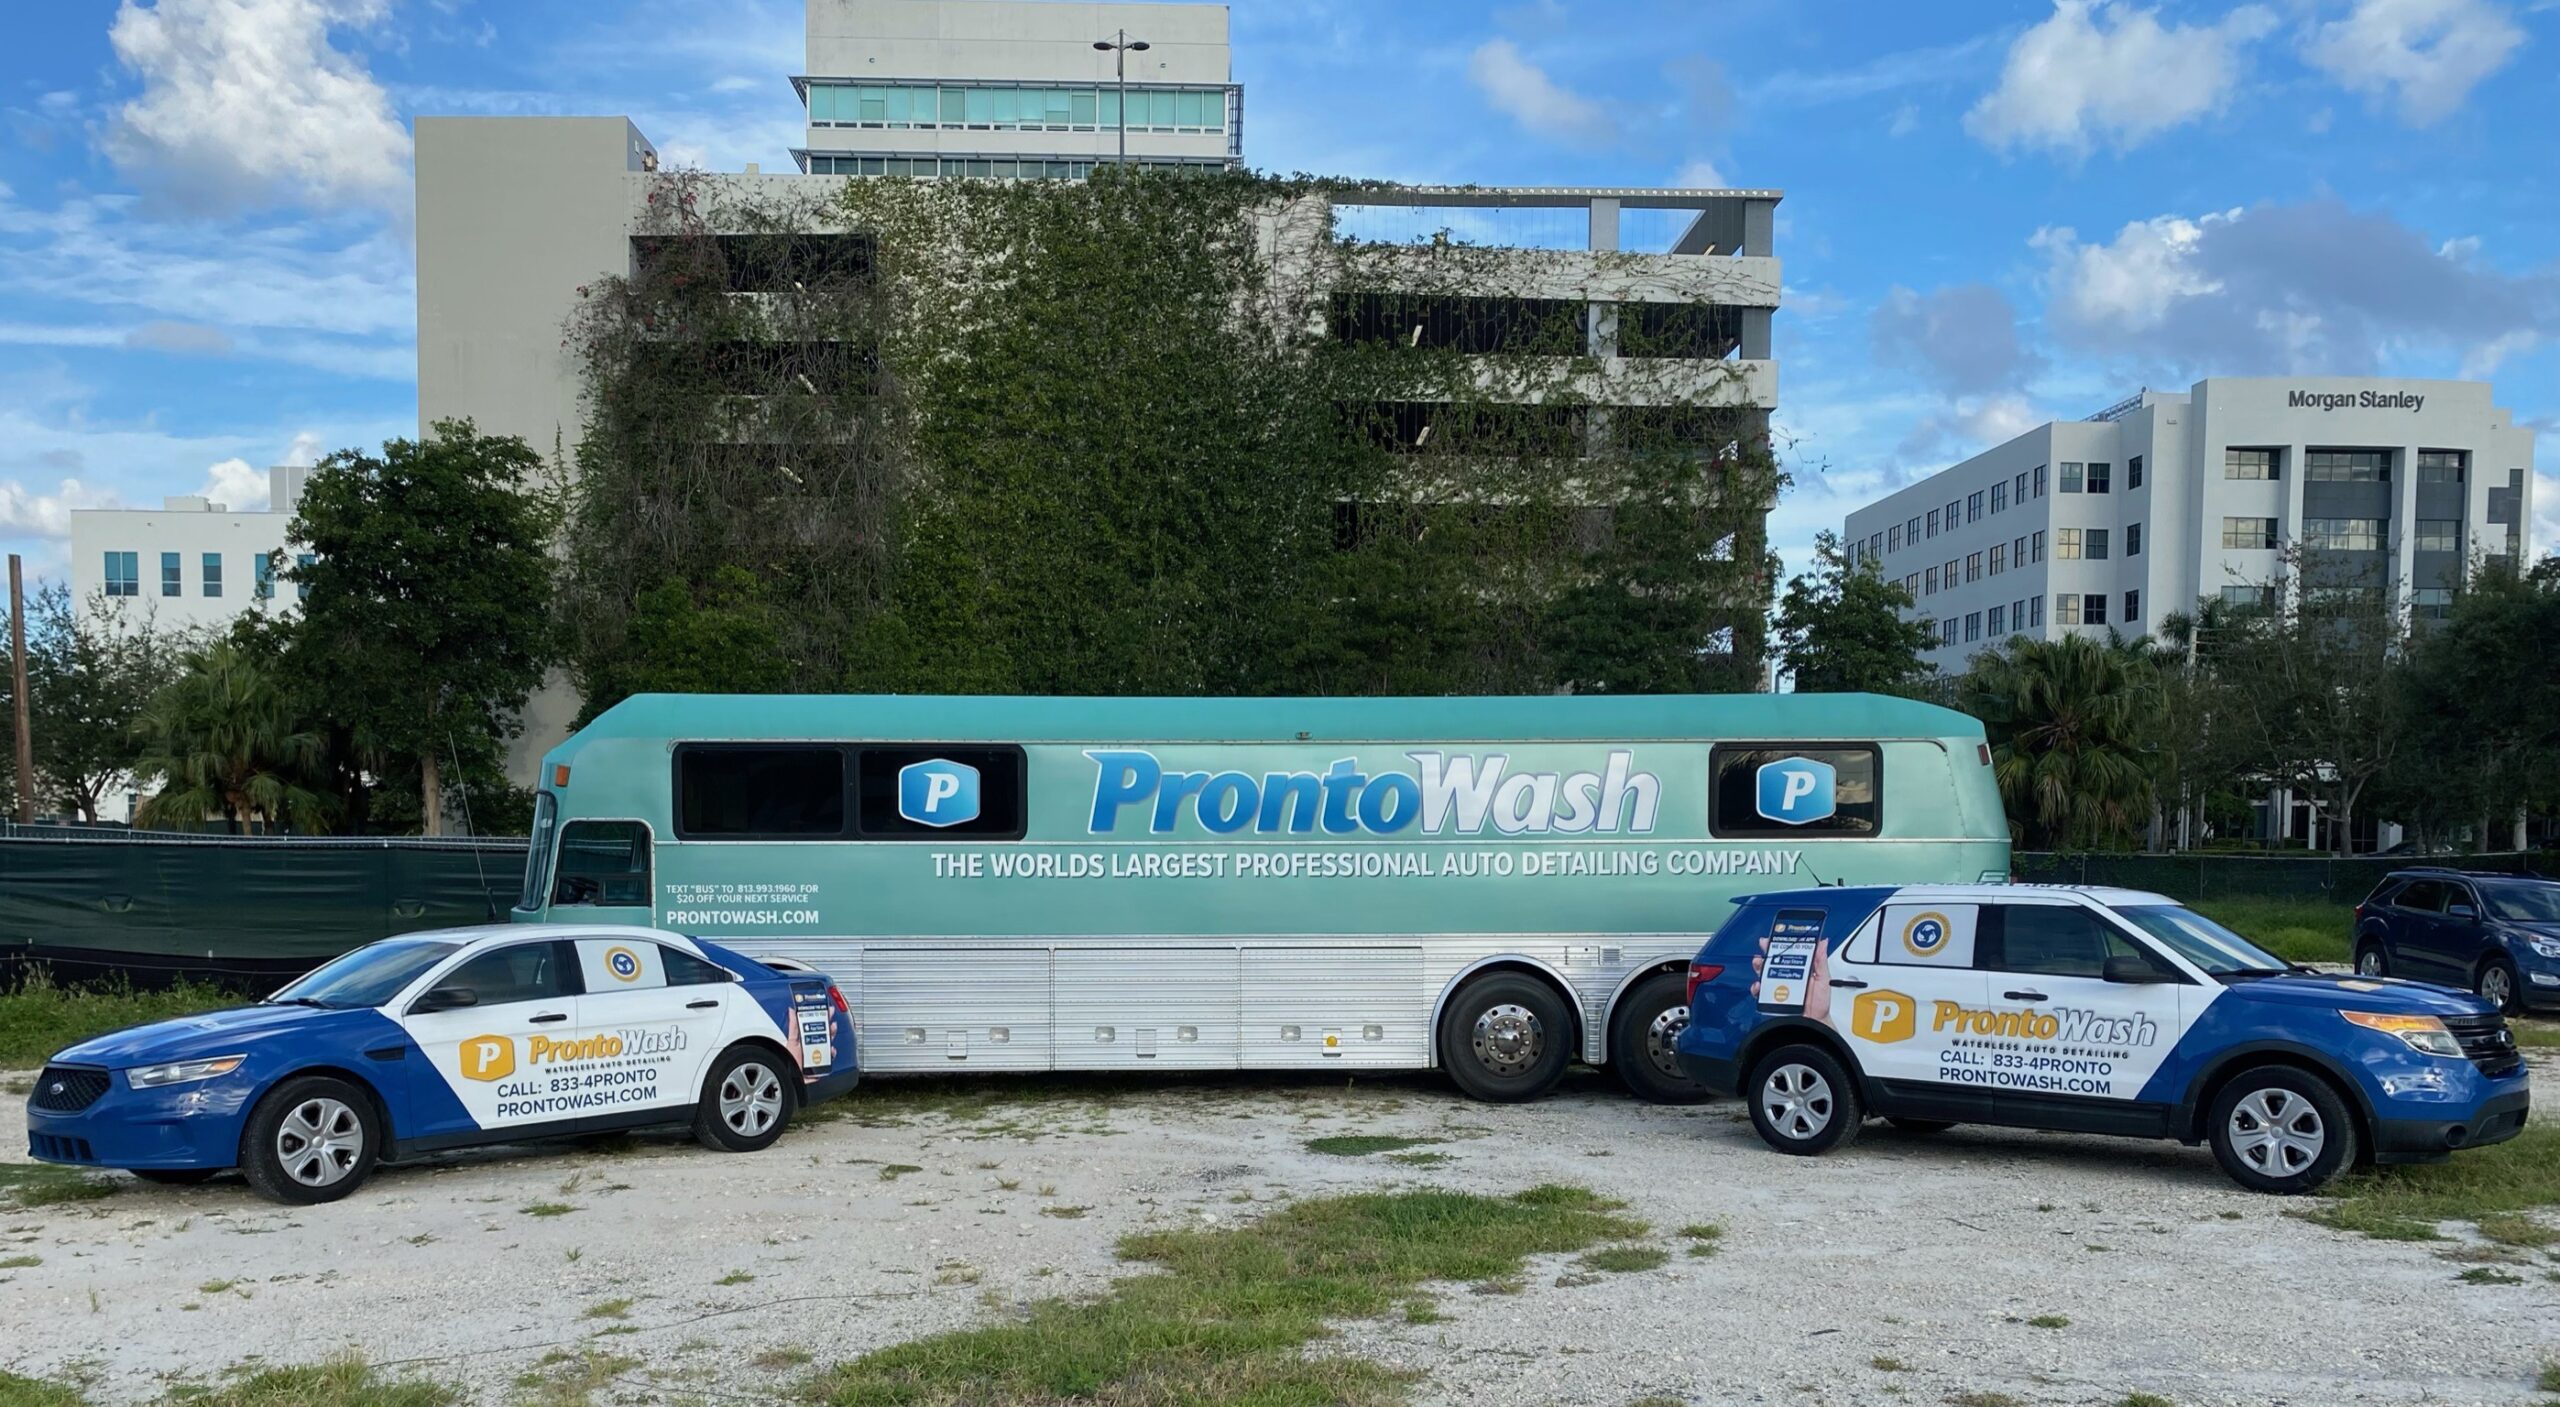 ProntoWash Mobile has expanded to Fort Lauderdale, FL